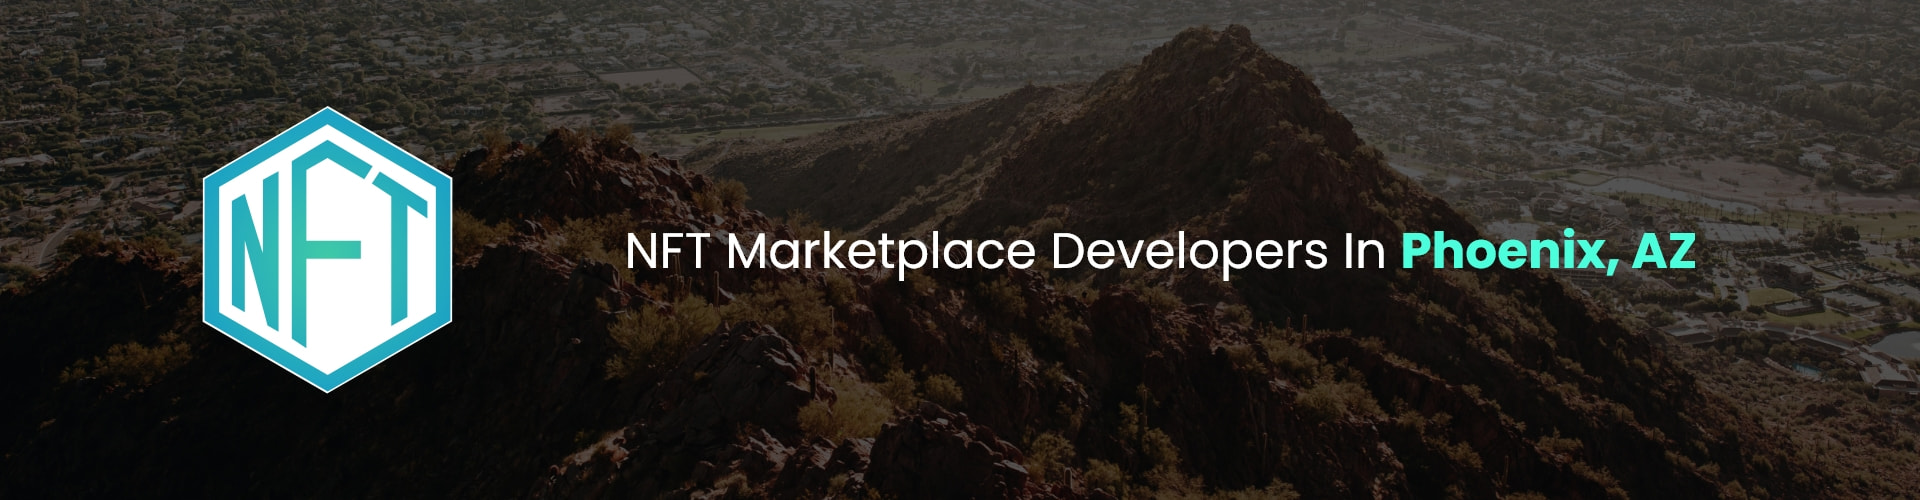 hire nft marketplace developers in phoenix